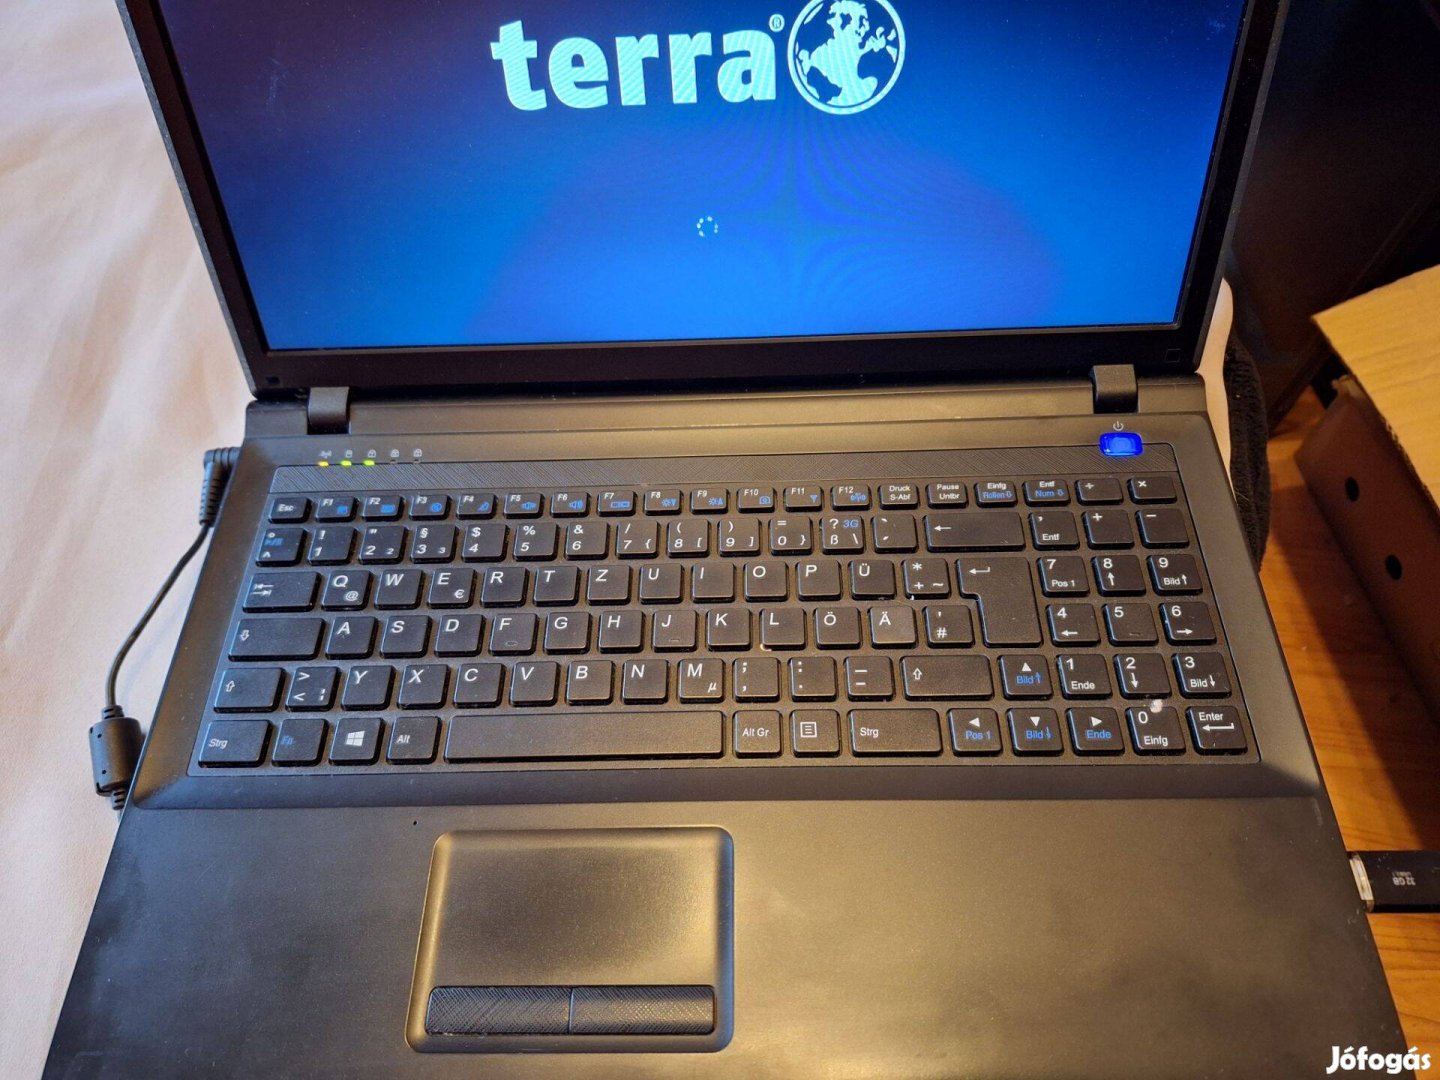 Eladó:Terra Mobile 1512, 15,6" HD Kijelző, Intel Celeron 1037U proce